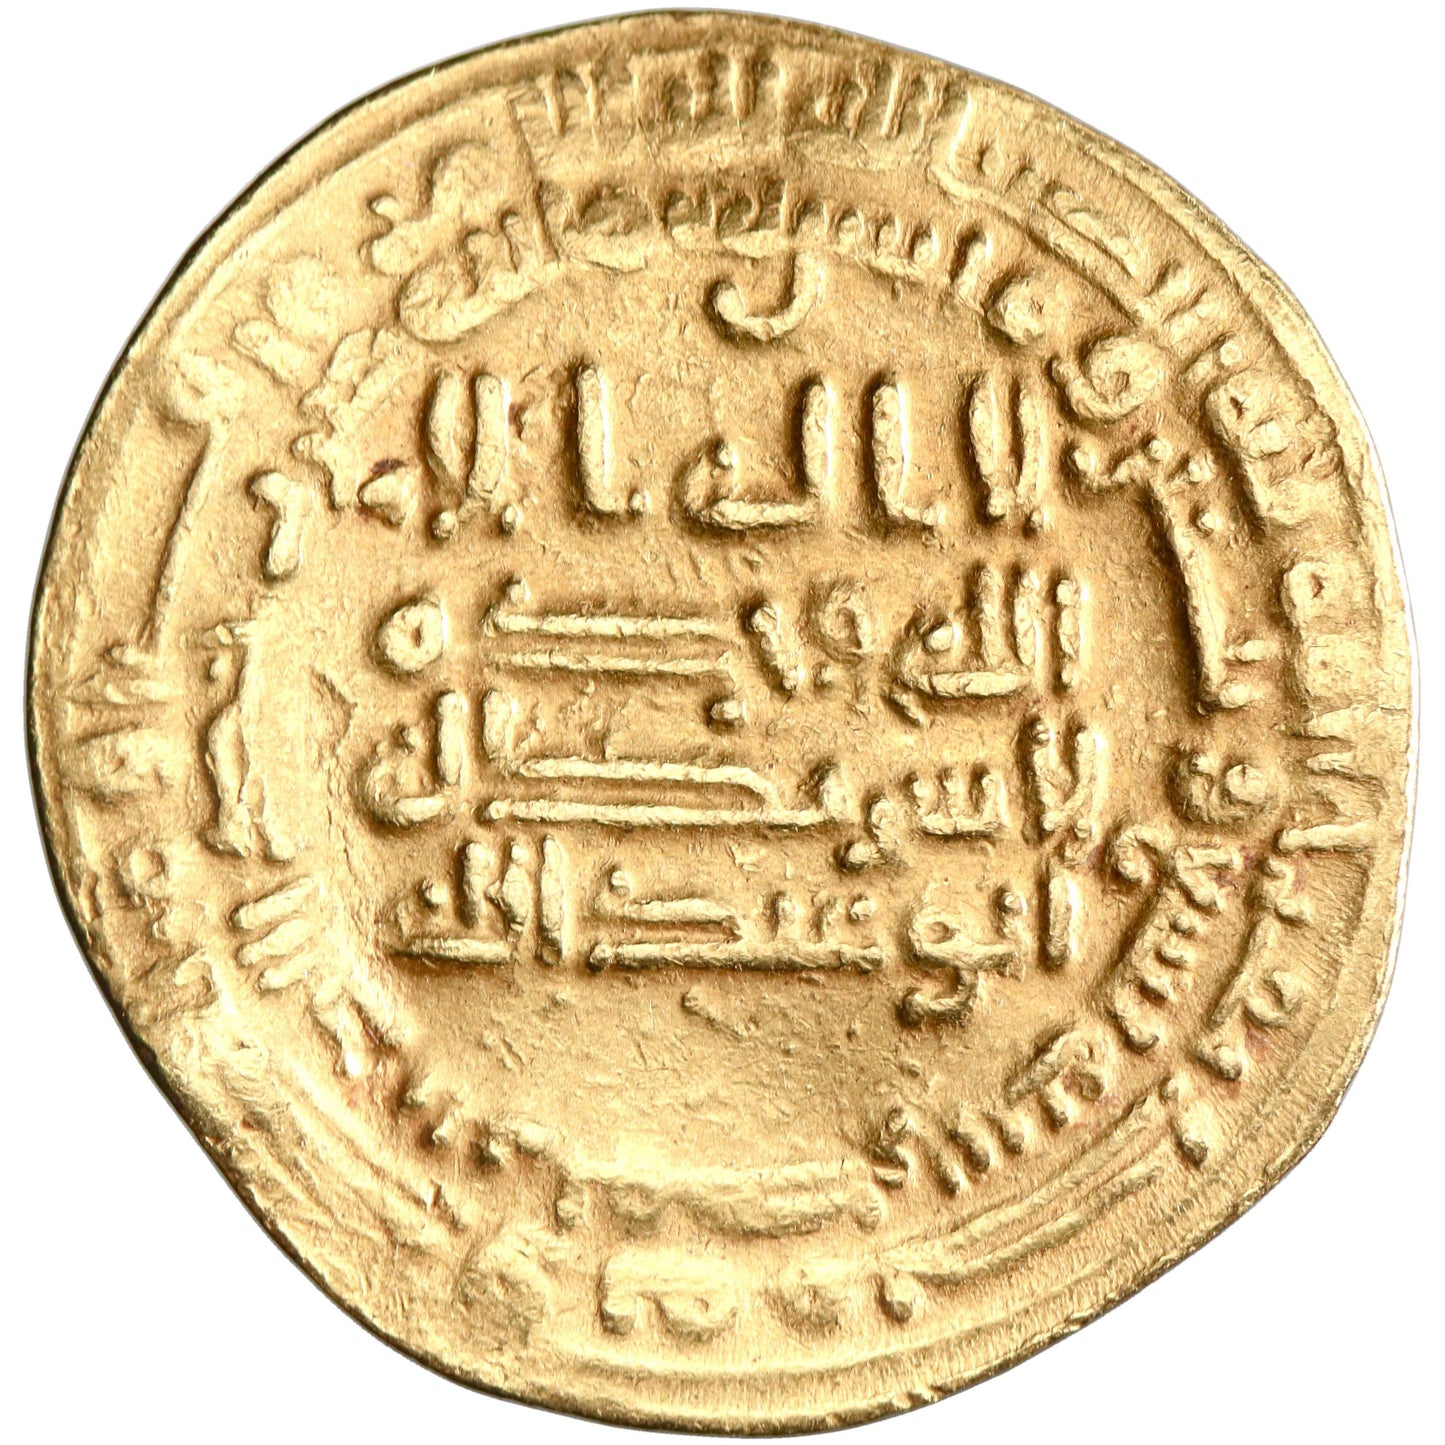 Abbasid, al-Mutawakkil, gold dinar, Misr (Egypt) mint, AH 239, citing Abu 'Abd Allah